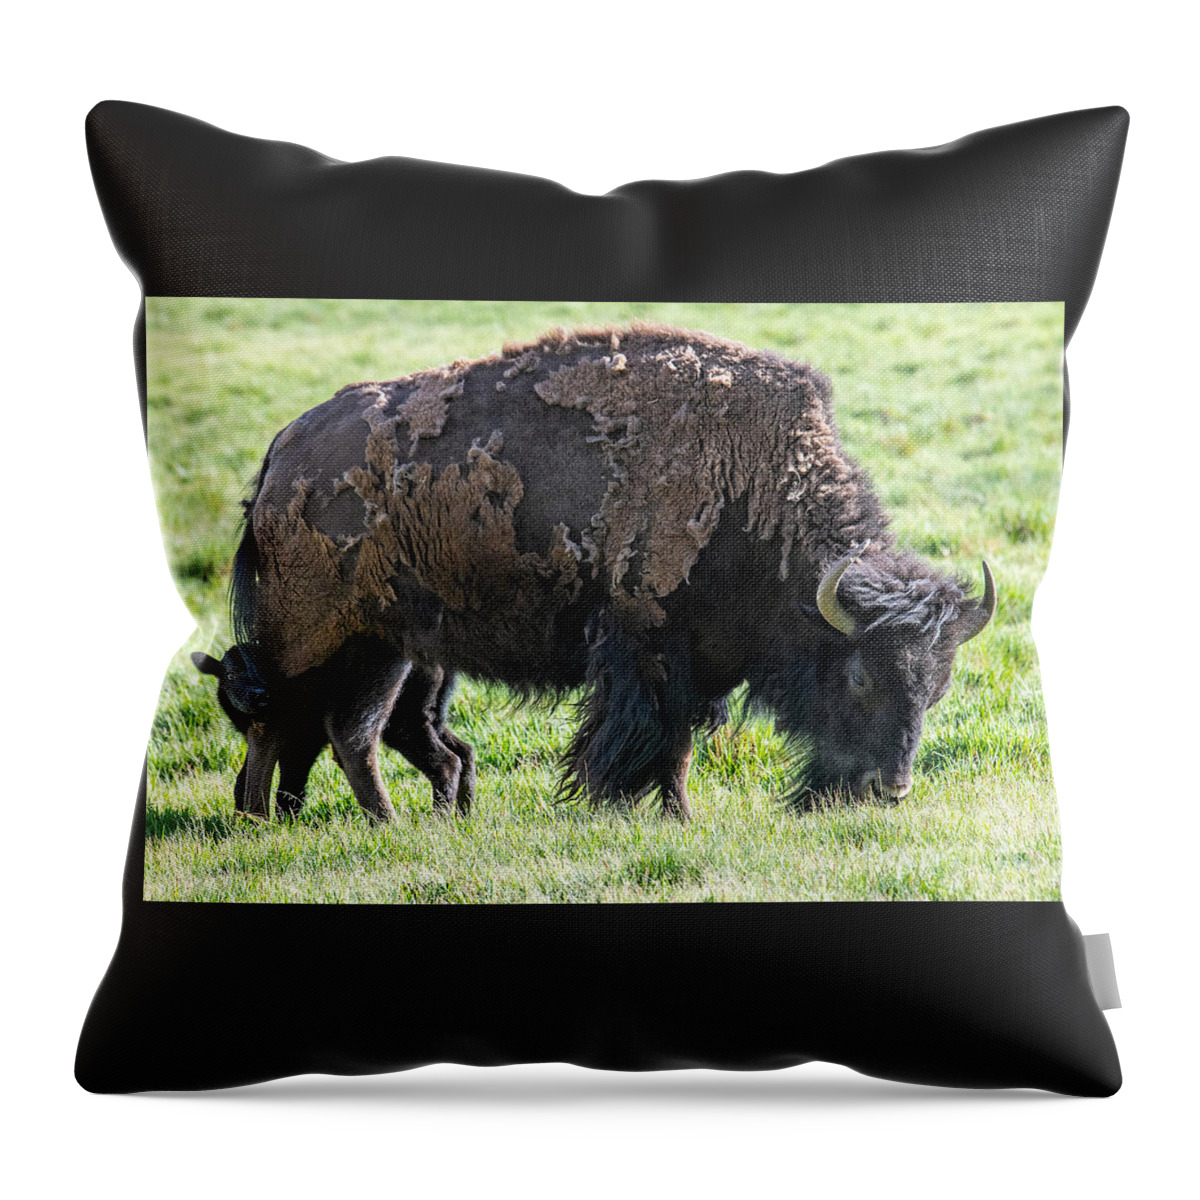 Buffalo With Baby Beefalo Throw Pillow featuring the digital art Buffalo with baby beefalo by Tammy Keyes